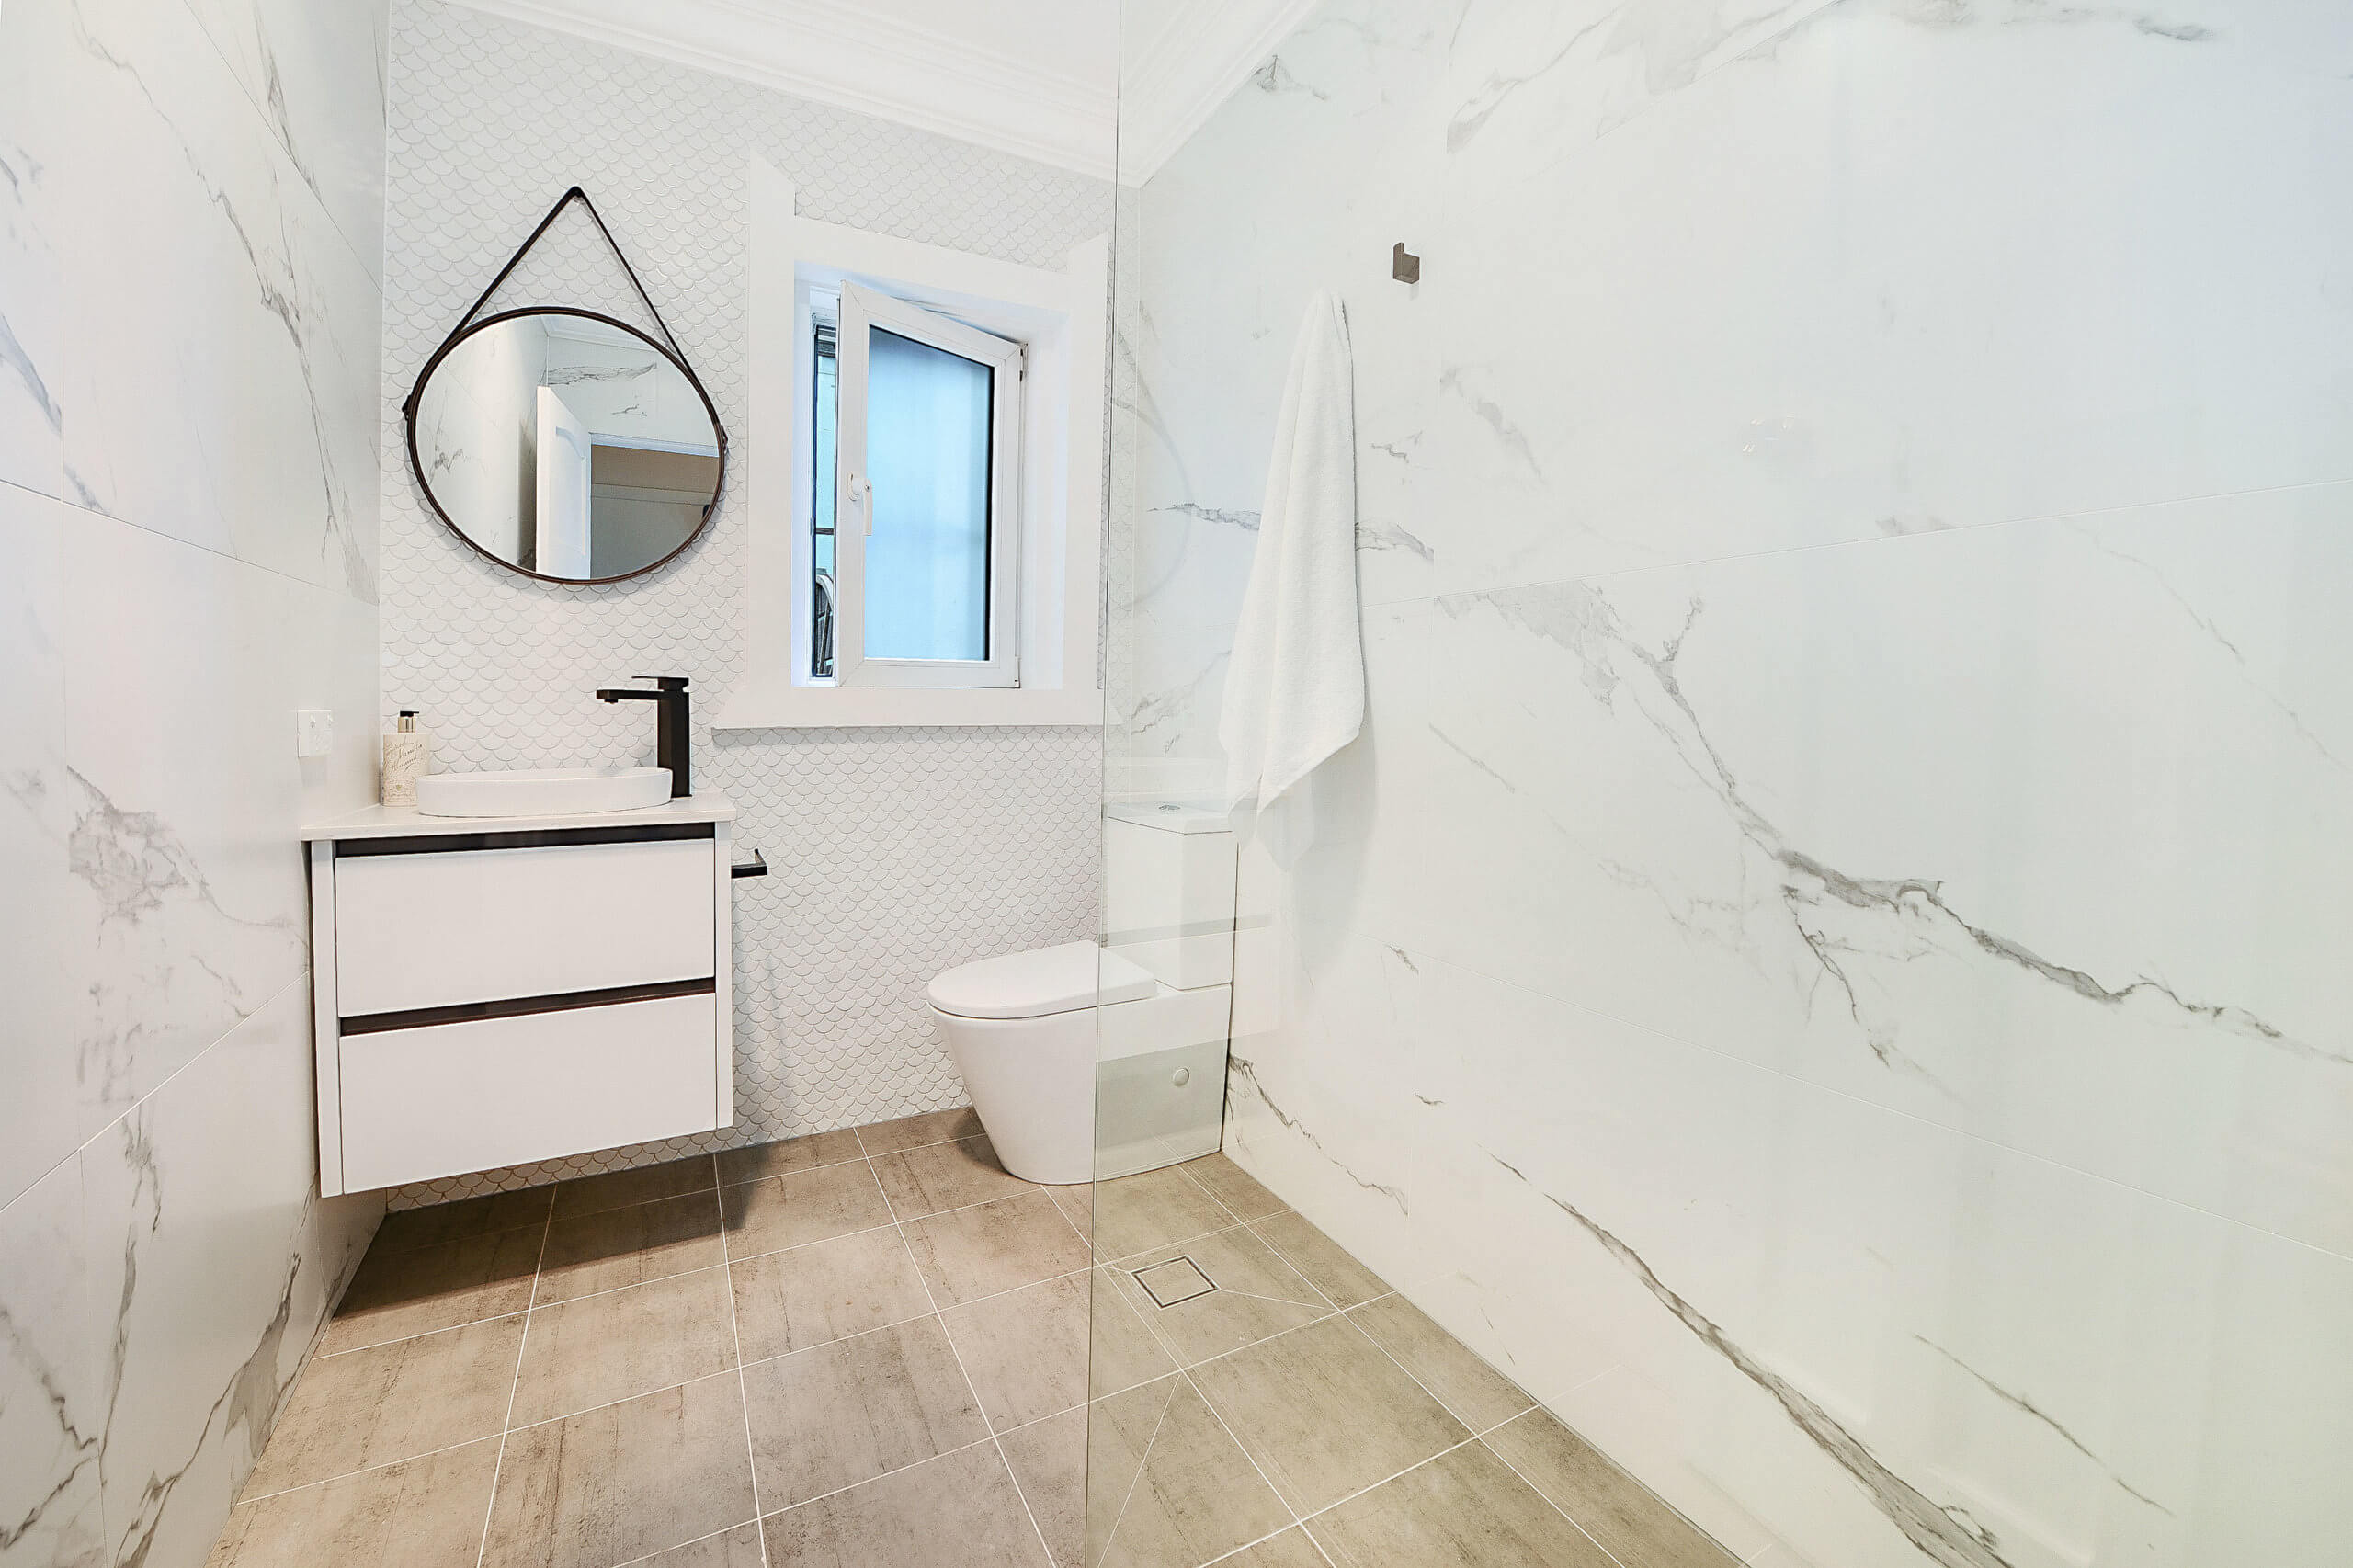 Complete apartment renovation in Bondi Beach